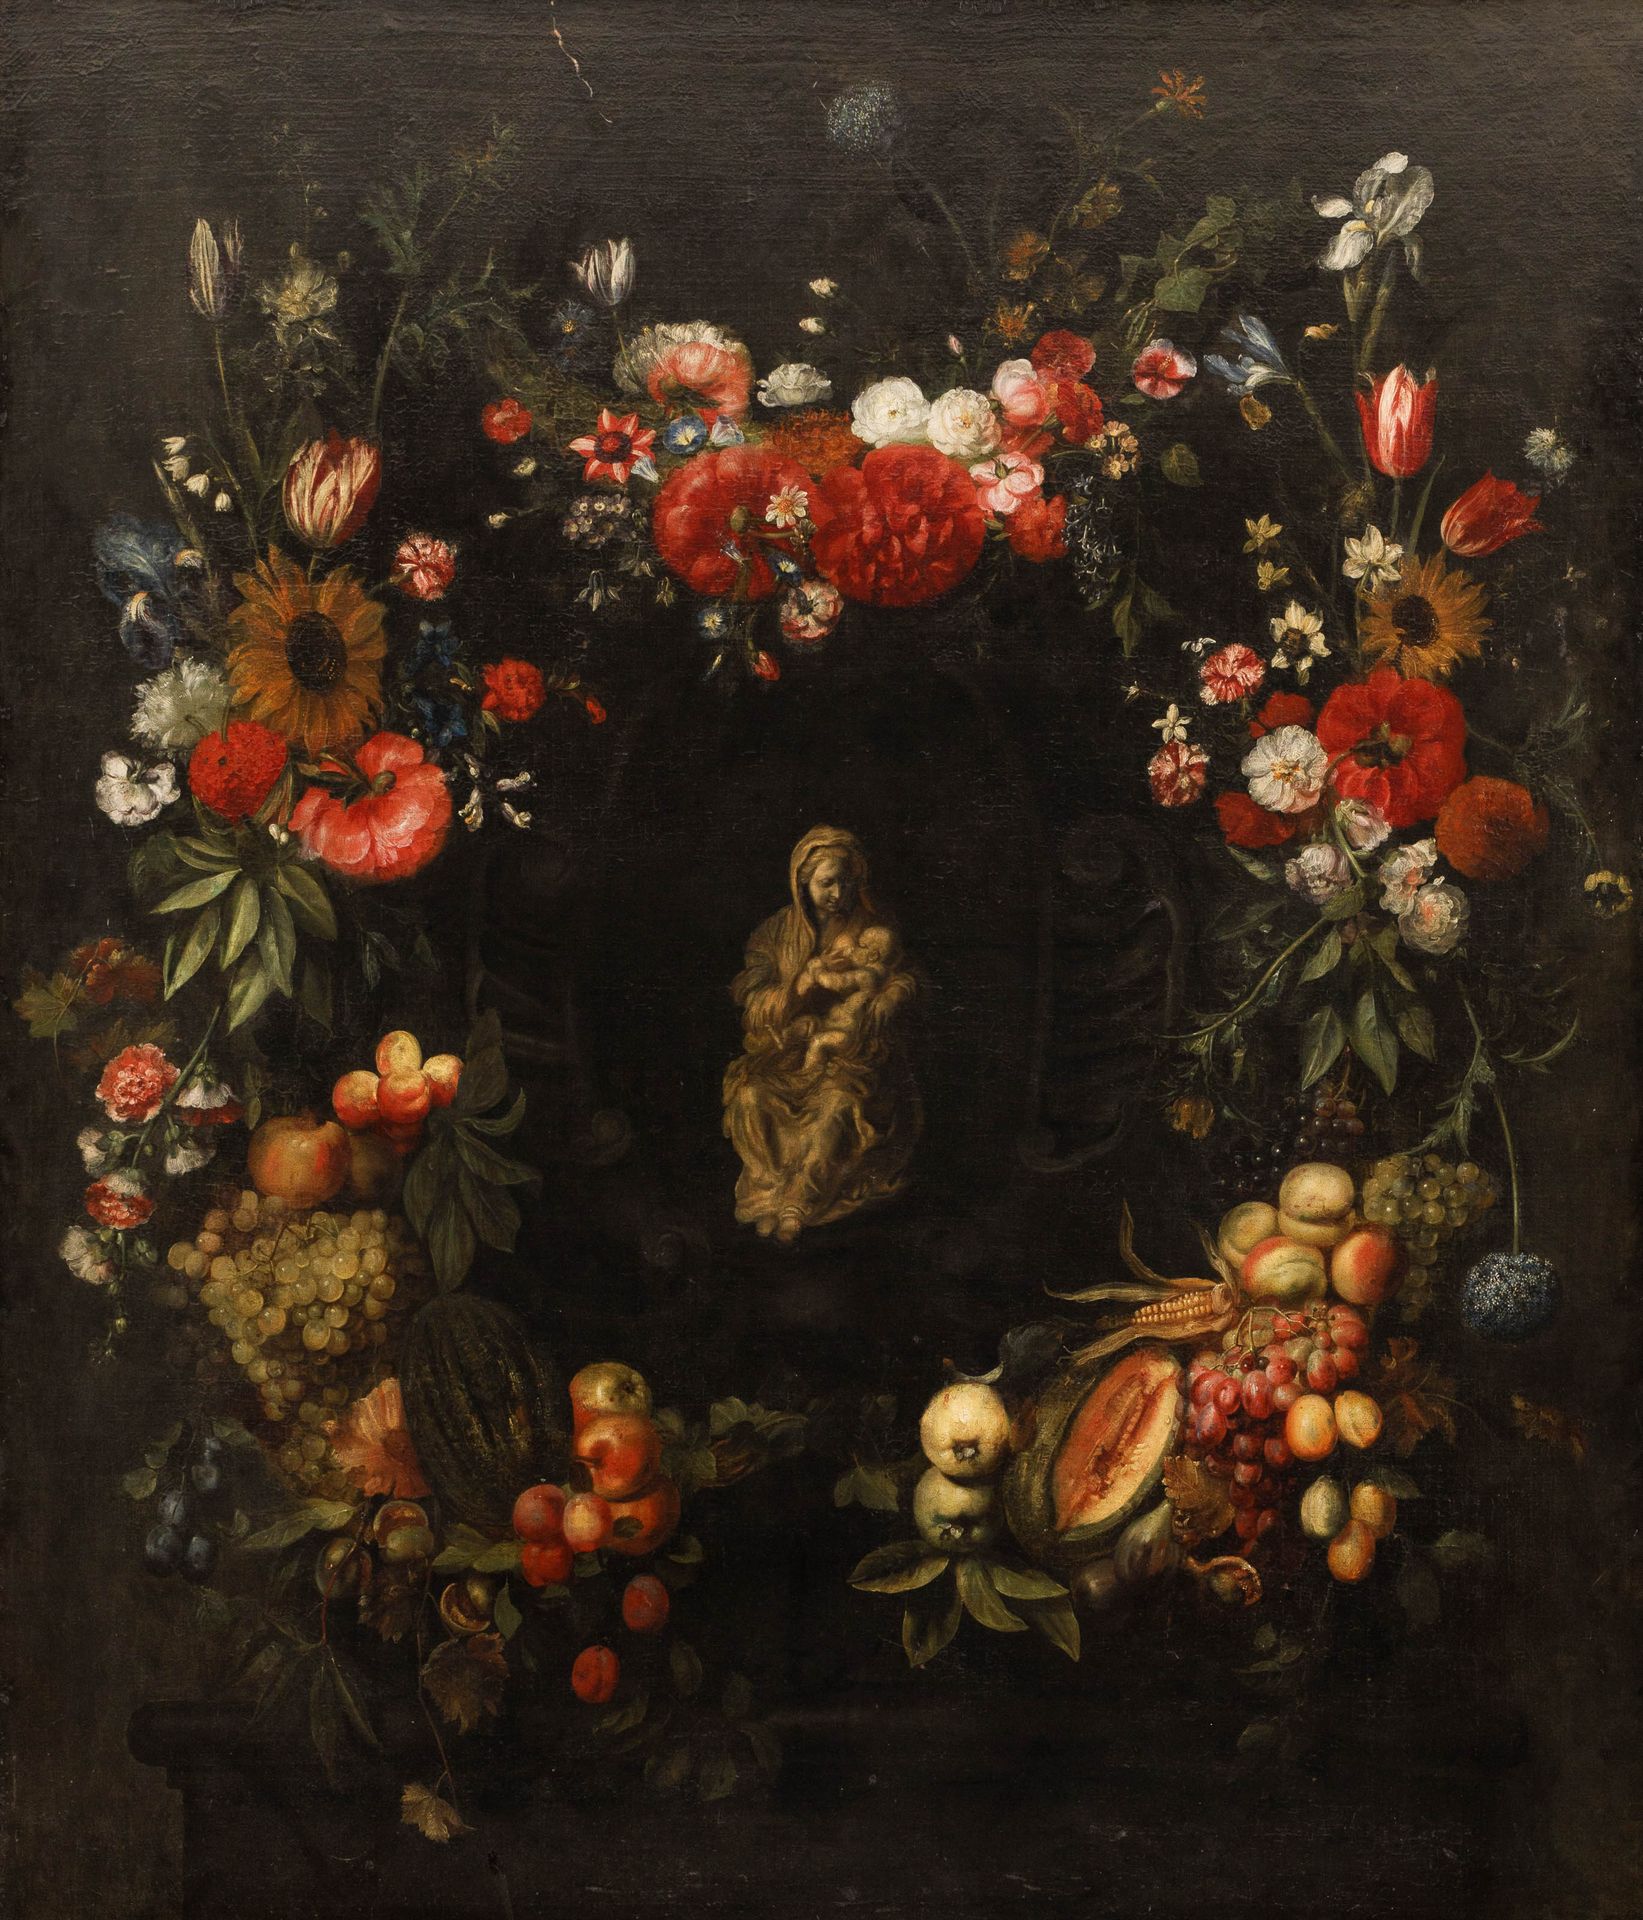 FRANS YKENS (1601-1693) (归属)

围绕着圣母像的鲜花和水果花环。

布质，在胶合板上涂抹大理石。

右下角署名 "Snyders"。
&hellip;